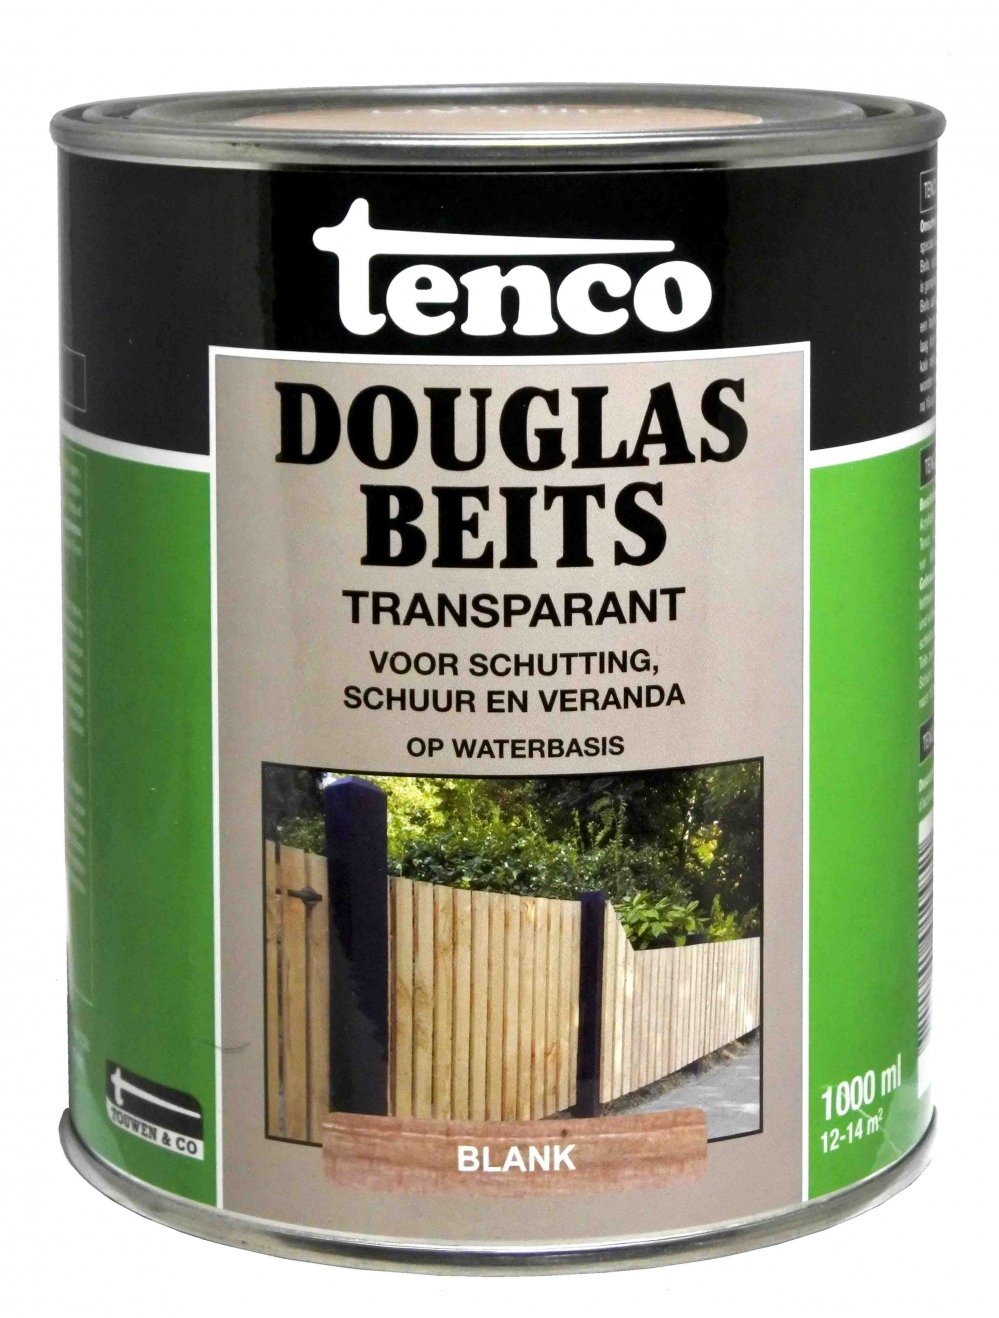 Douglas olie - Tenco-Douglas-Beits-1l-verfcompleet.nl